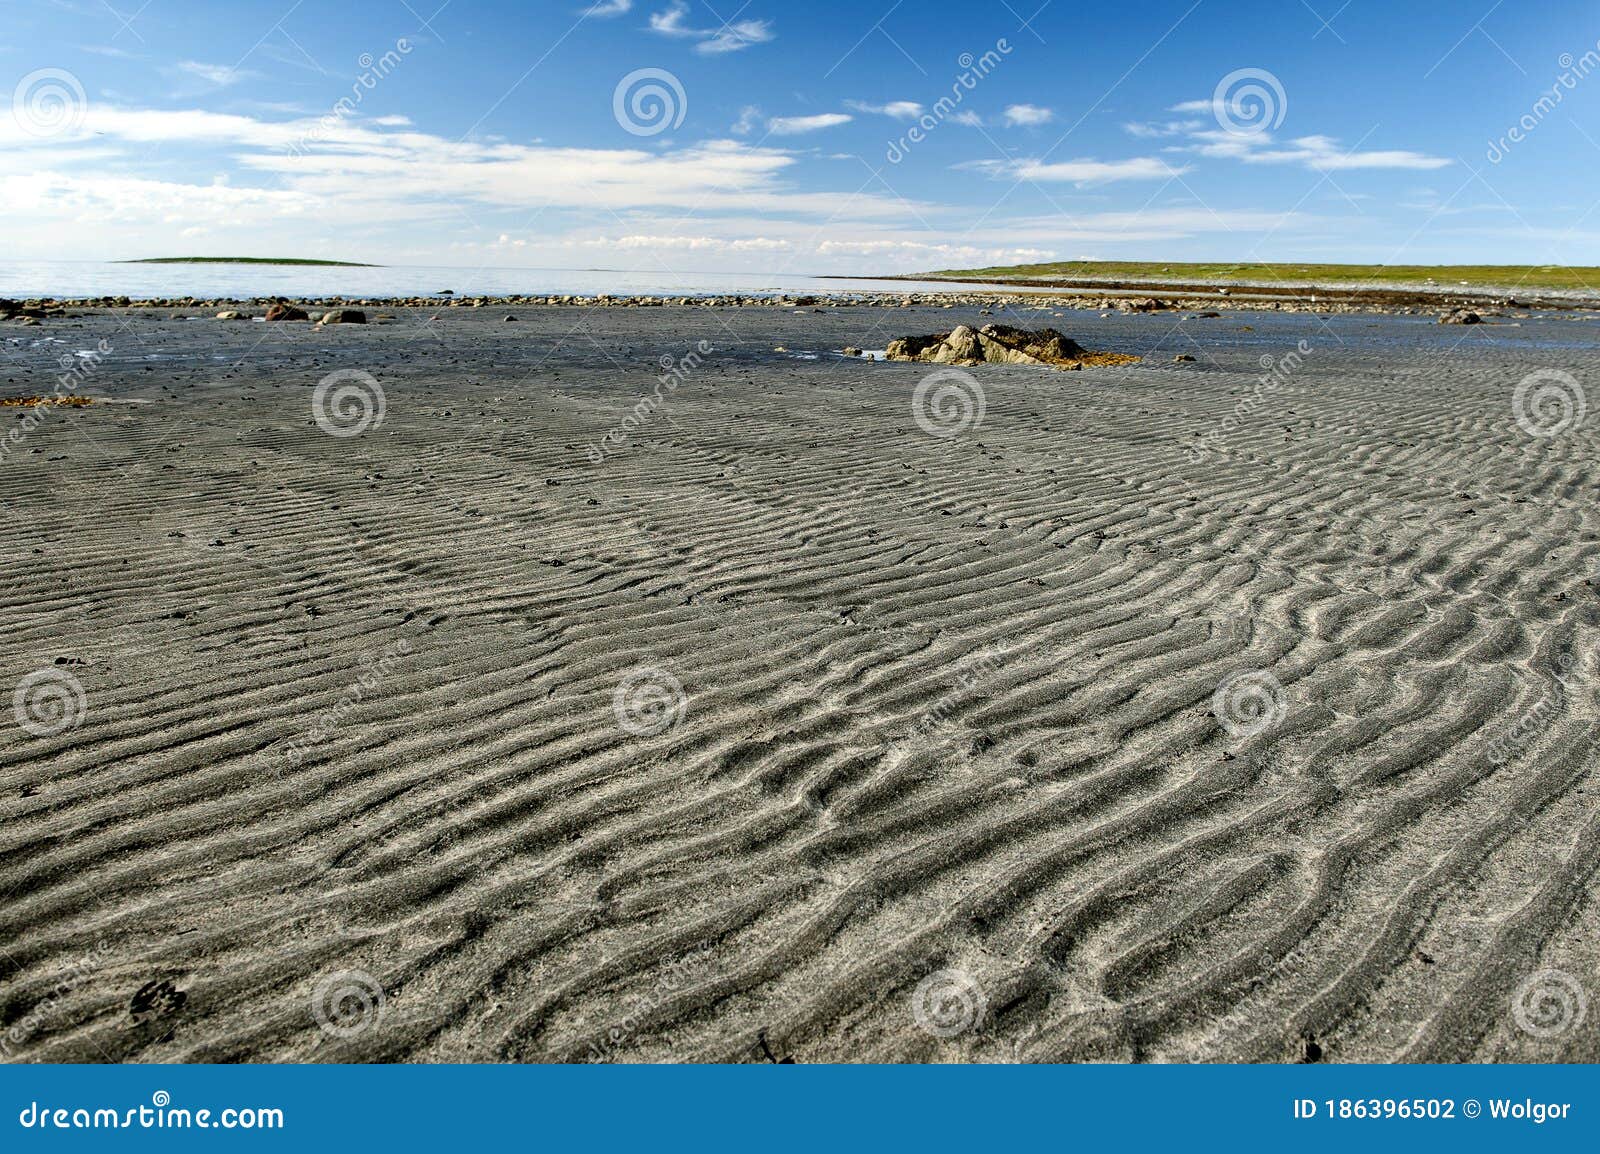 litoral lat.litoralis, sandy seabed after low tide